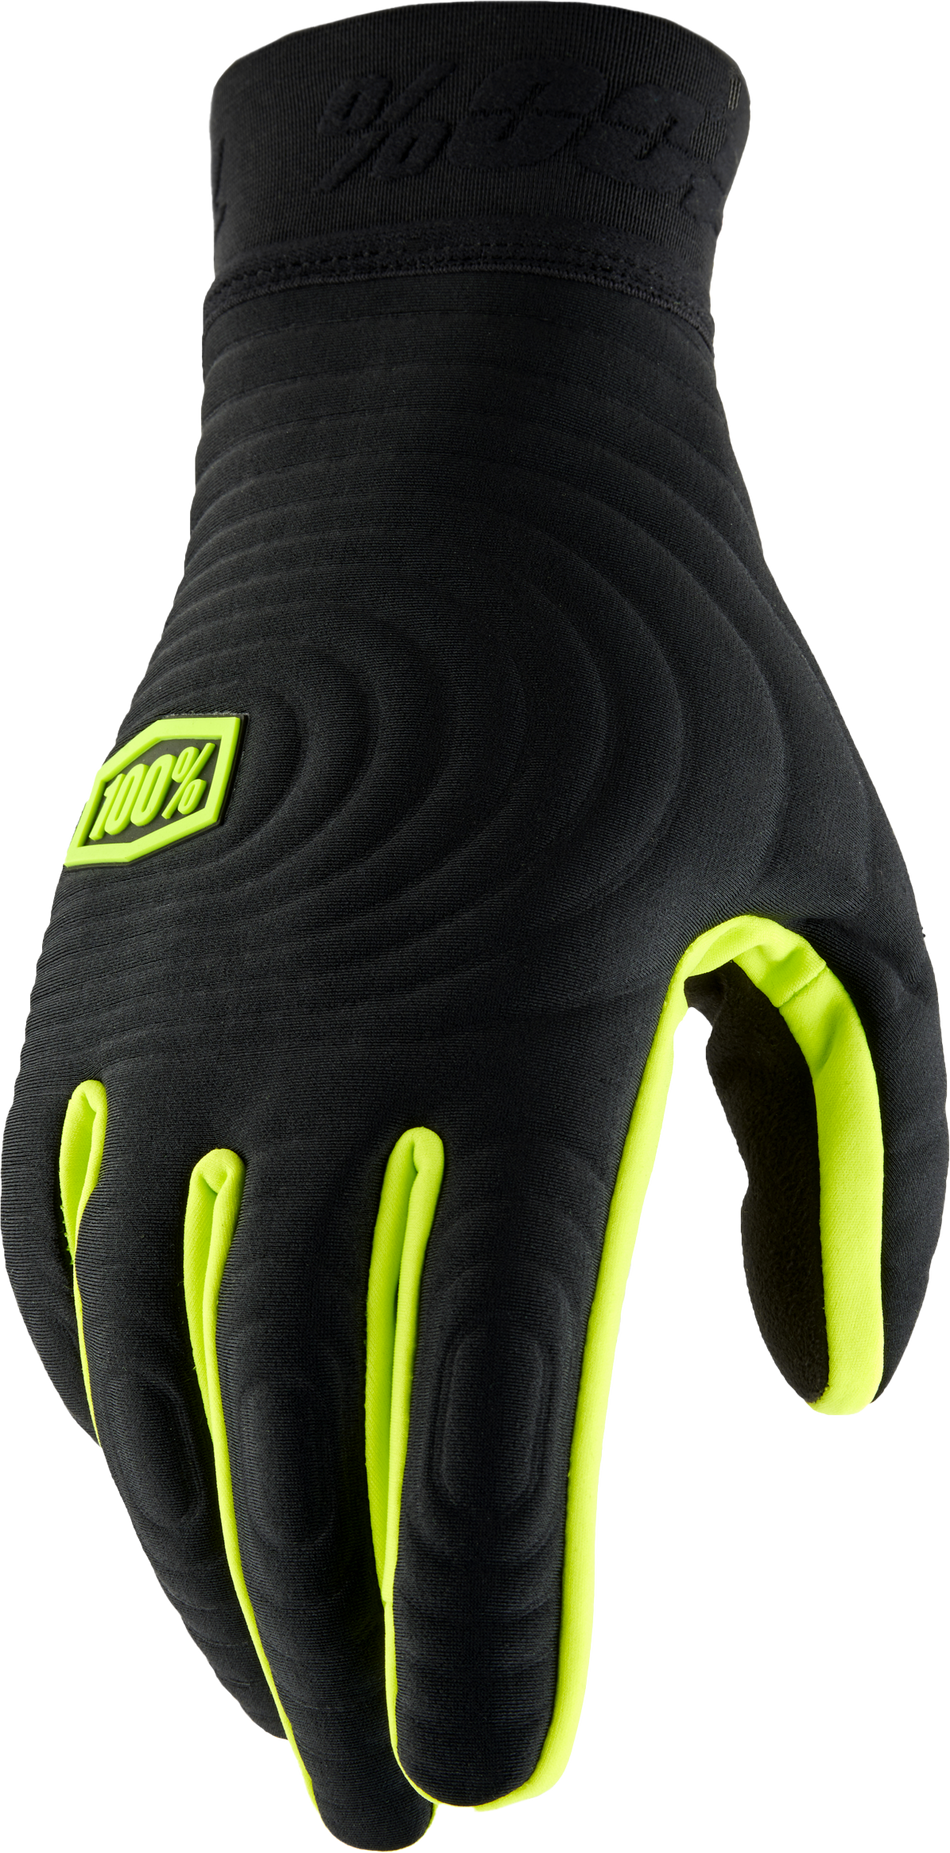 100% Brisker Xtreme Gloves Black/Fluo Yellow 2x 10030-00005